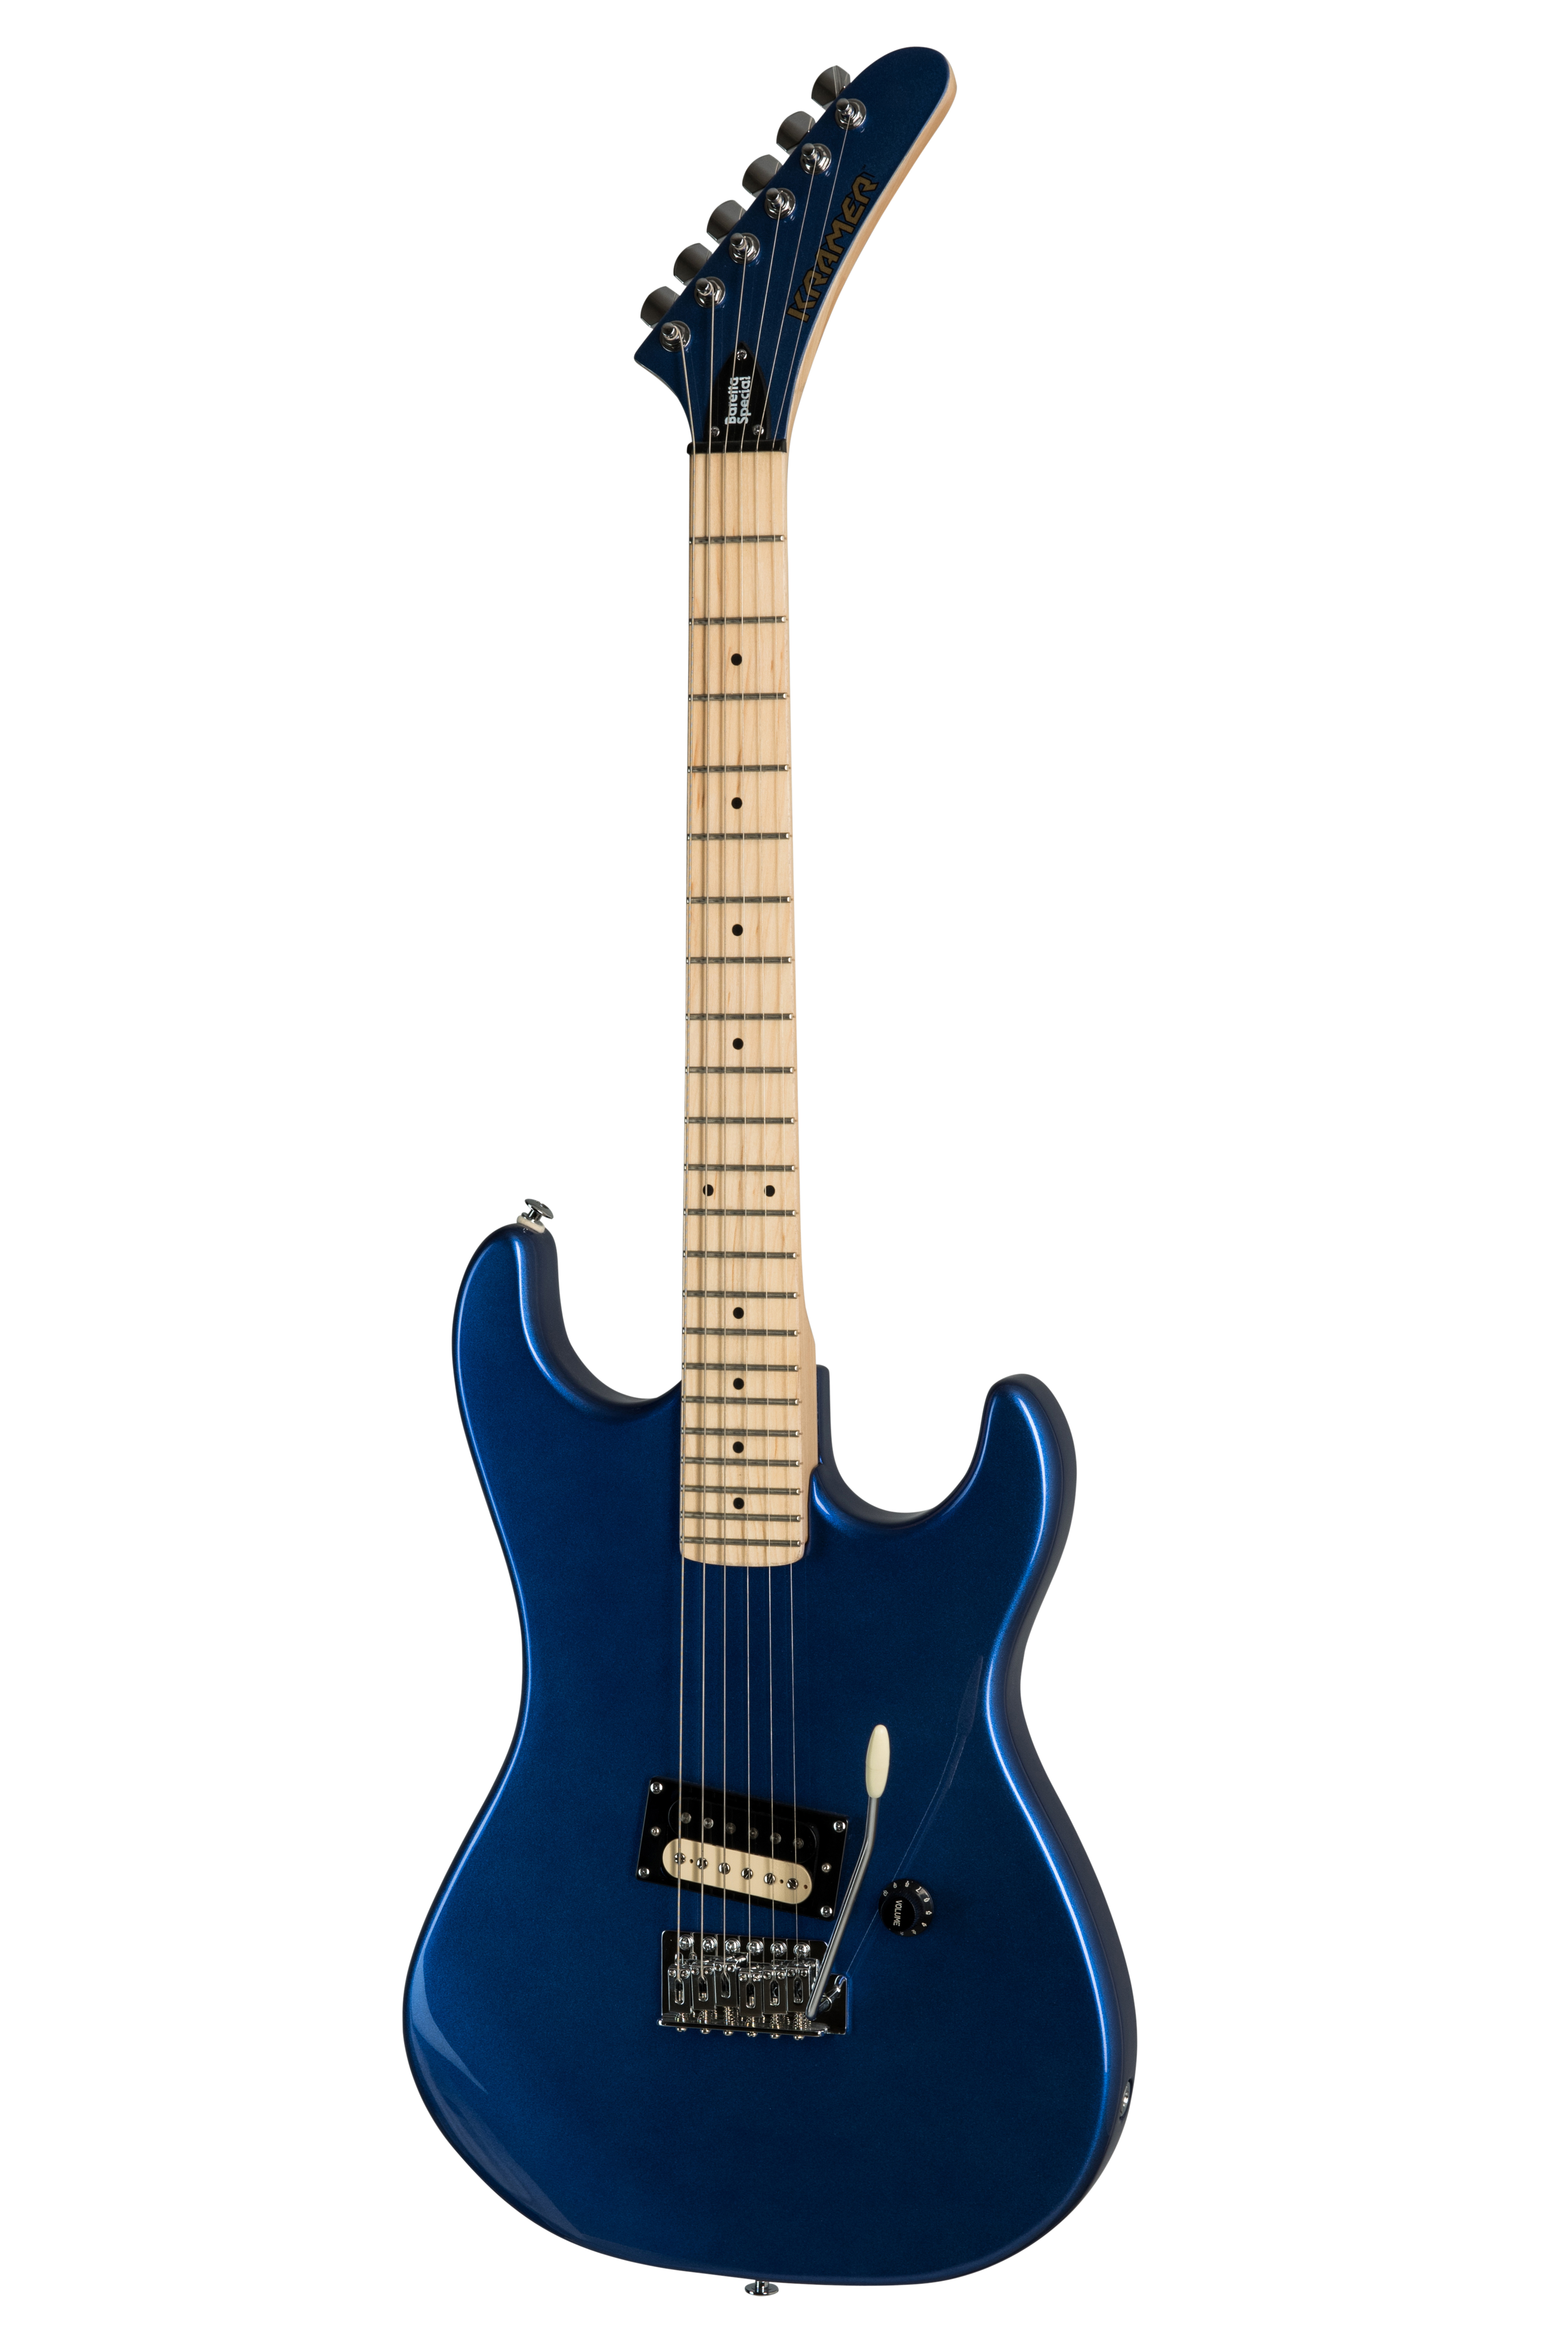 Number (!) guitar 2021 kramer dating serial best Gibson Serial